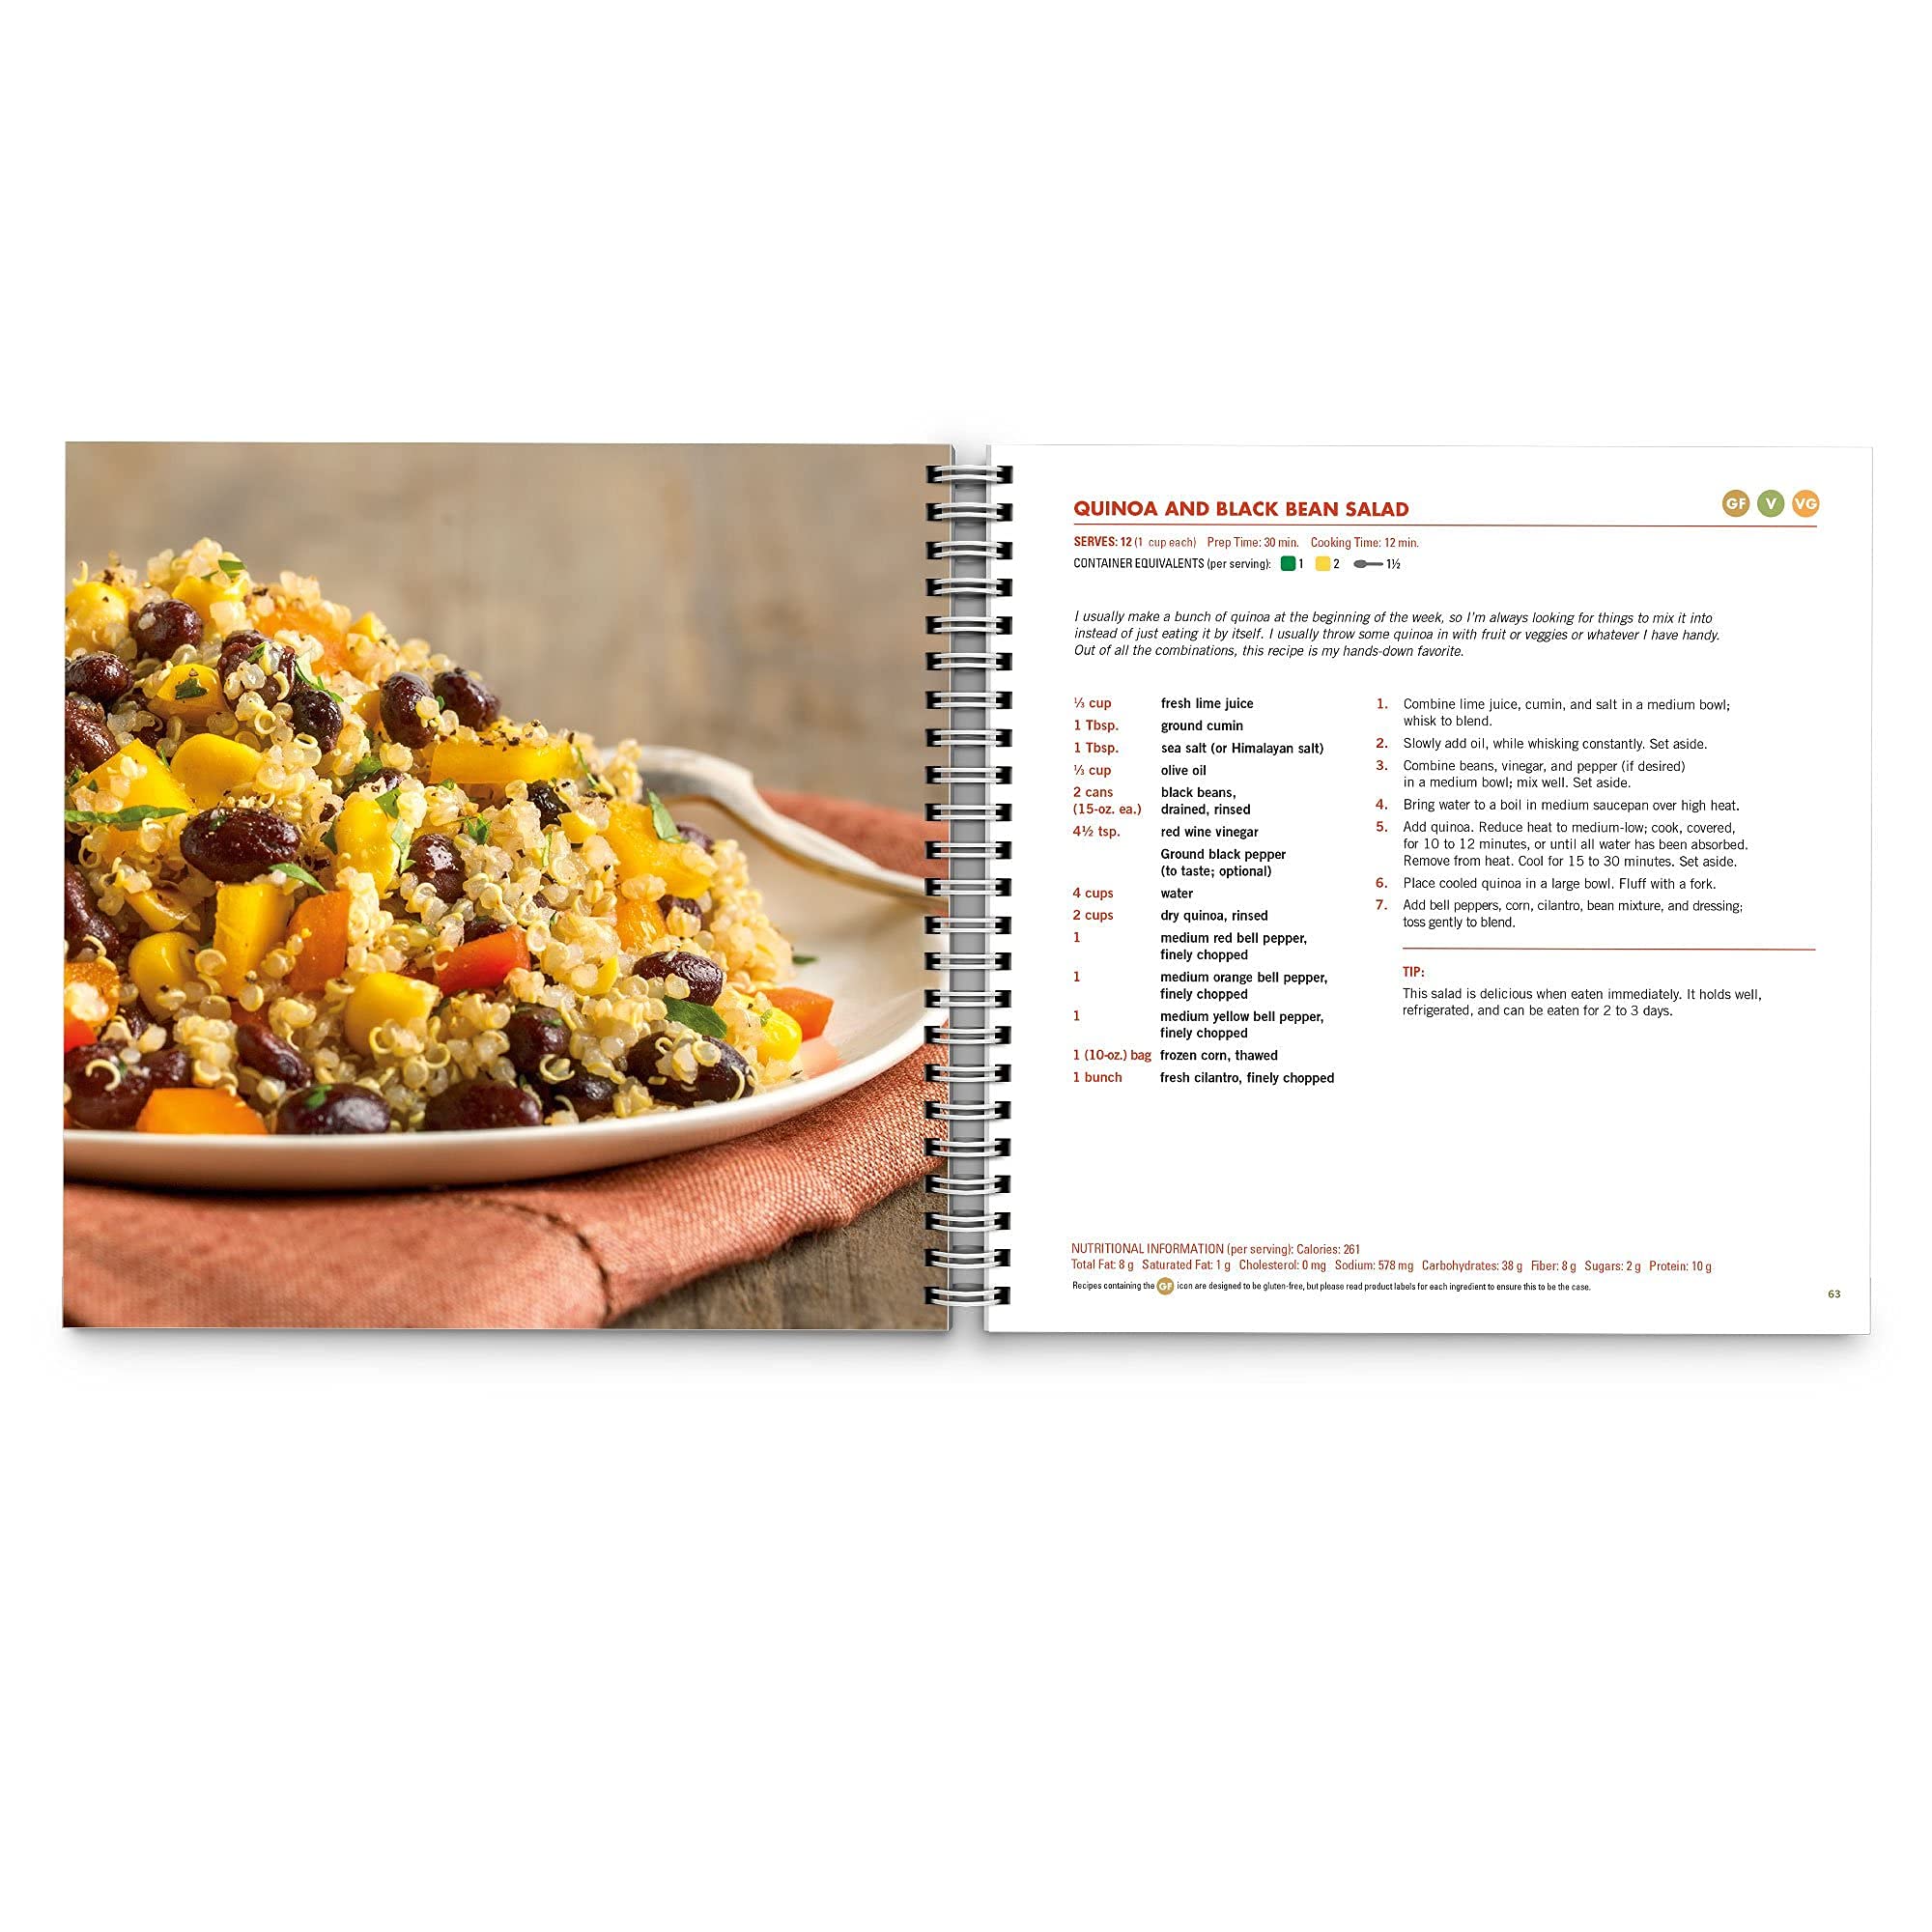 Beachbody Autumn Calabrese's FIXATE Recipe Book, 21 Day Fix Recipes, Healthy Cookbook, Easy to Follow Meal Plan Program for Portion Control, Vegan, Gluten Free, Vegetarian, Paleo, 101 Recipes